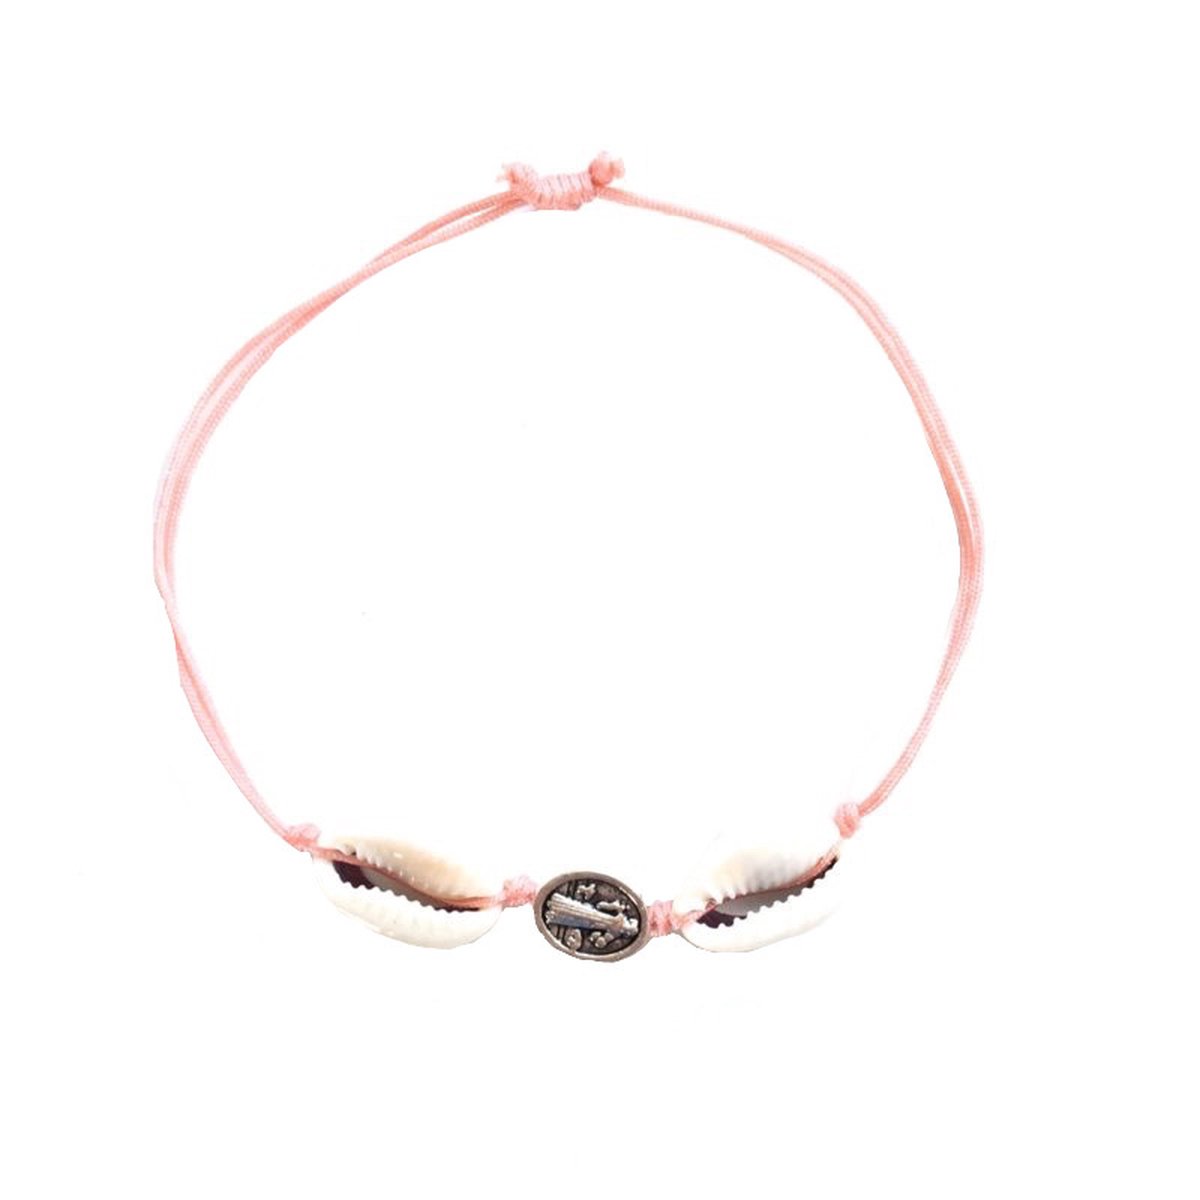 Perfect summer bracelet - pink